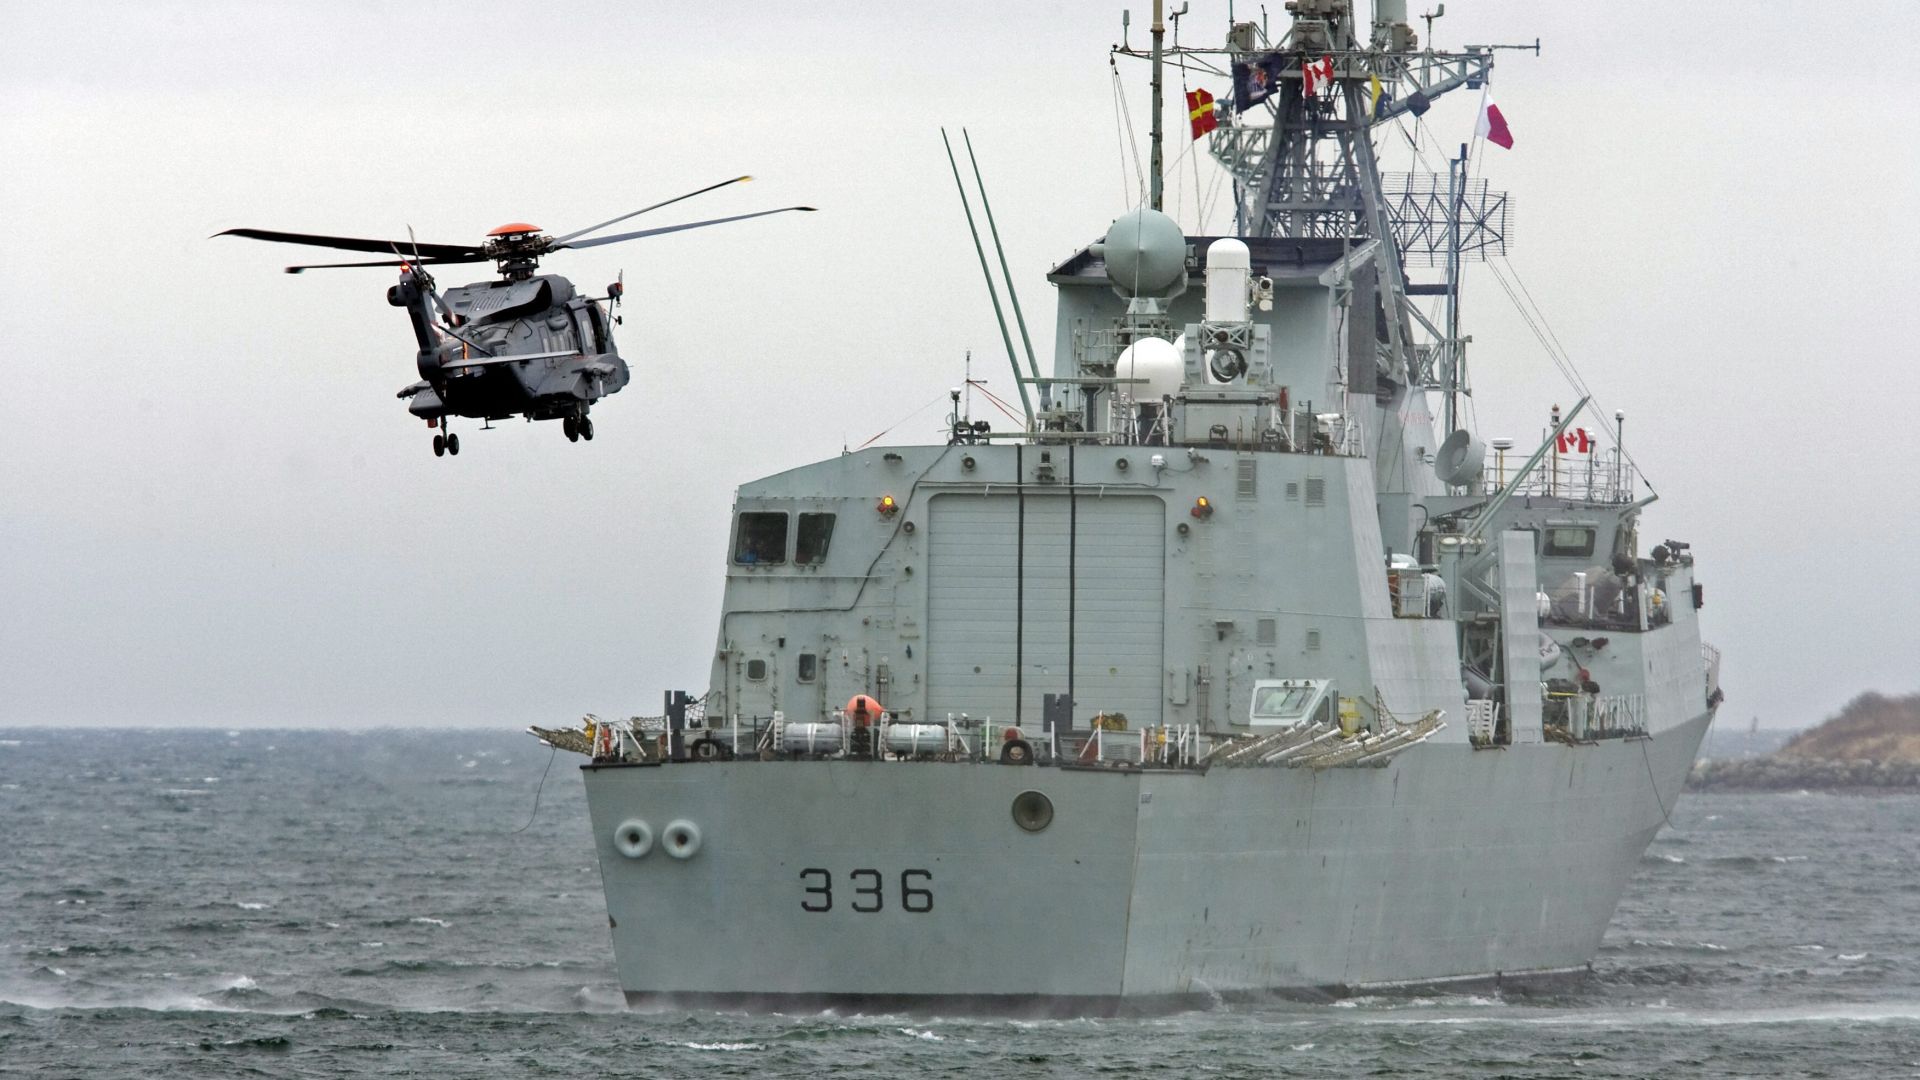 Сикорски СШ-148 Циклон, Британская армия, вертолет, Британия, Sikorsky CH-148 Cyclone, AgustaWestland, attack helicopter, British Army, Britain (horizontal)